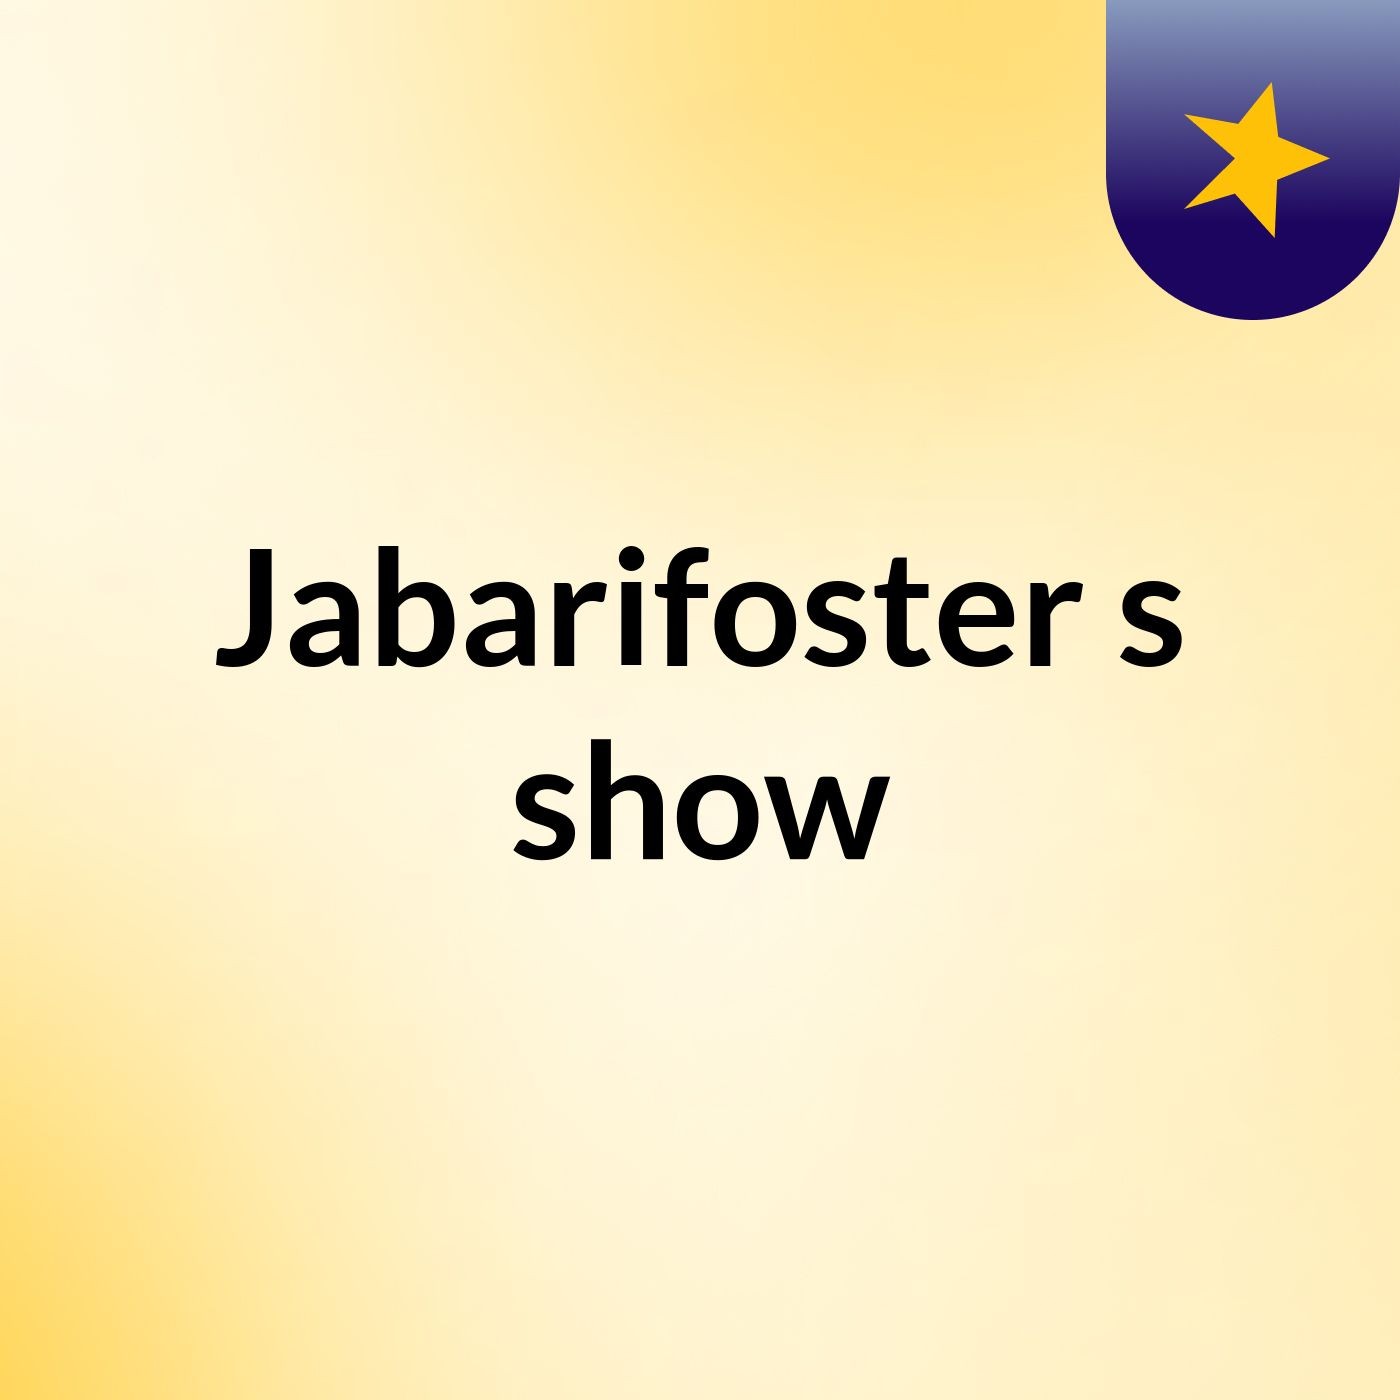 Jabarifoster's show